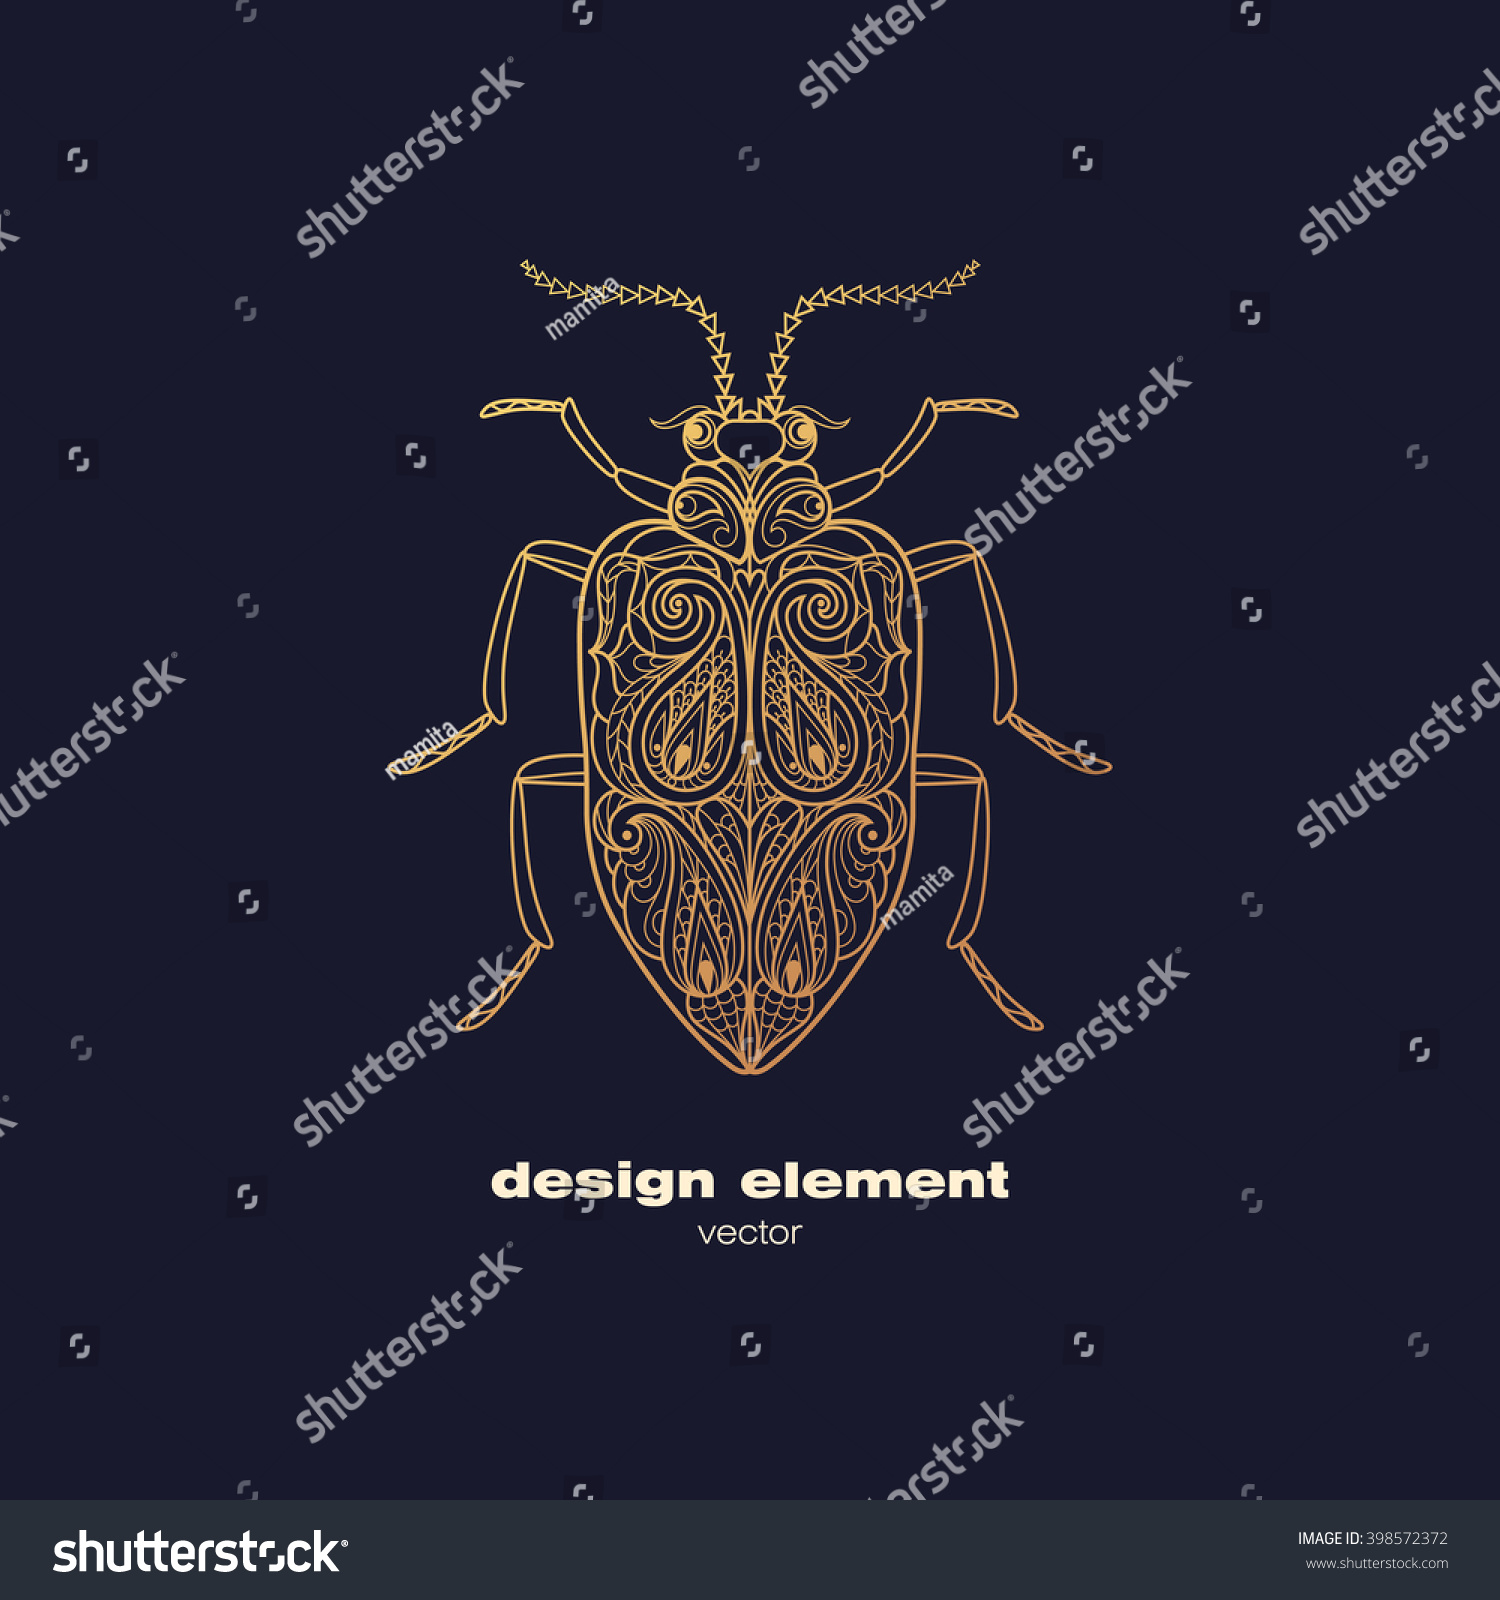 SVG of Vector design element - beetle. Icon decorative insect isolated on black background. Modern decorative illustration. Template for logo, emblem, sign, poster. Concept of gold foil print. svg